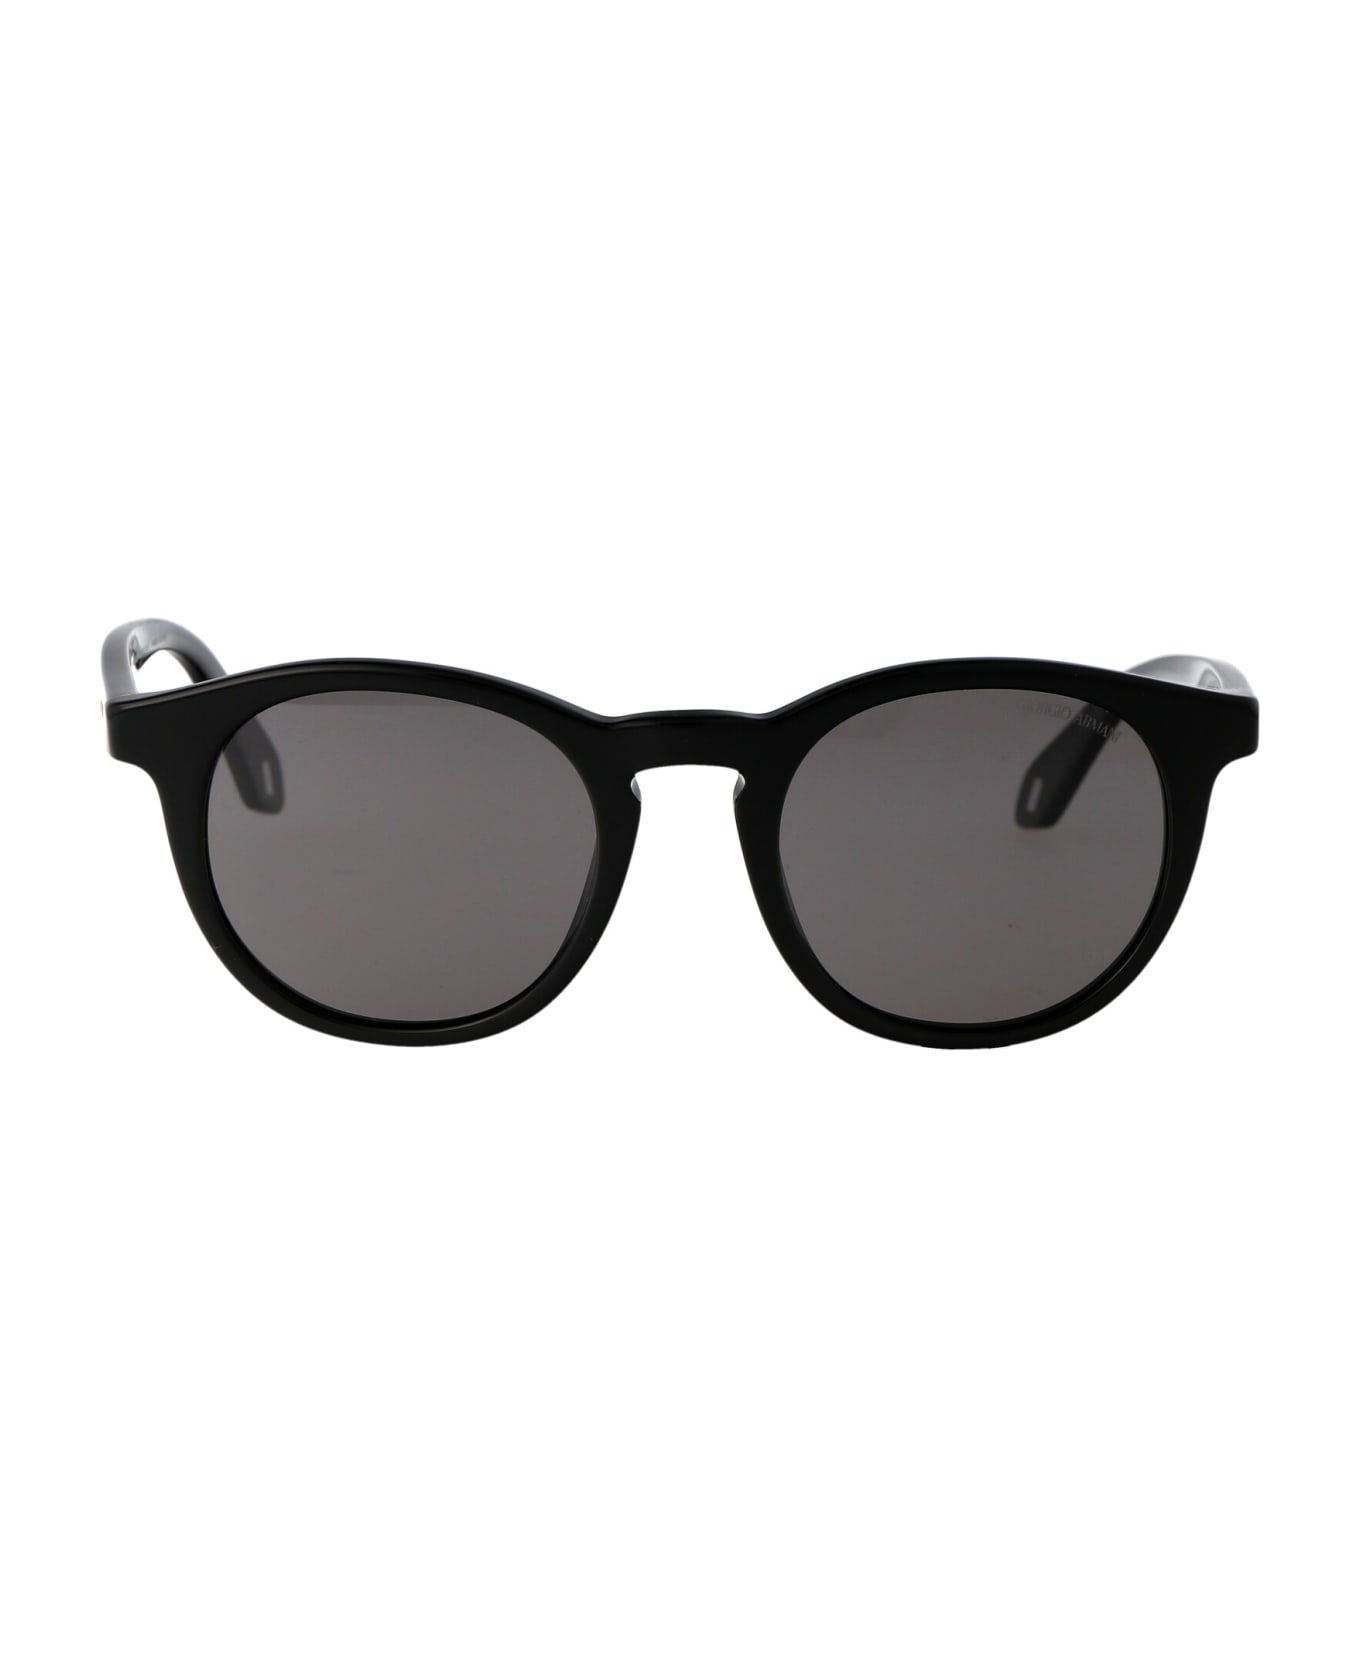 Giorgio Armani 0ar8192 Sunglasses - 5875B1 Black